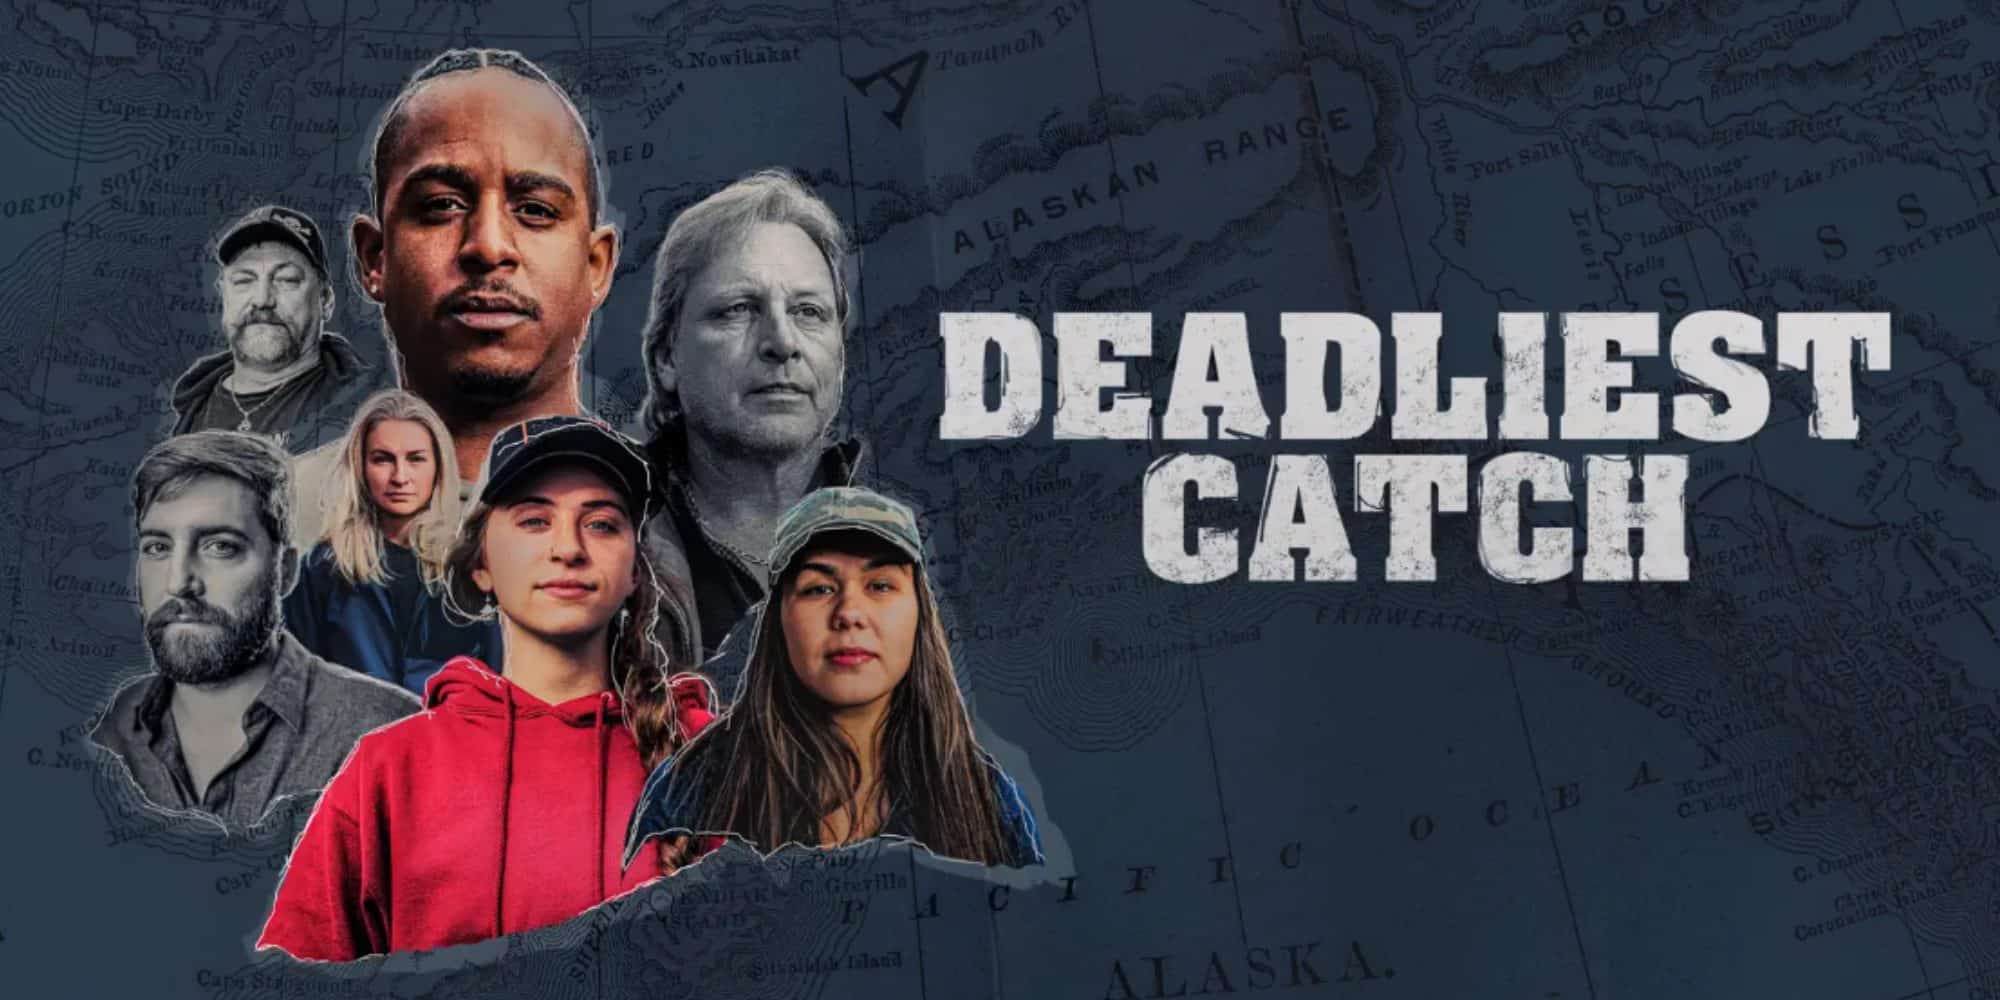 How To Watch Deadliest Catch Season 19 Episodes?